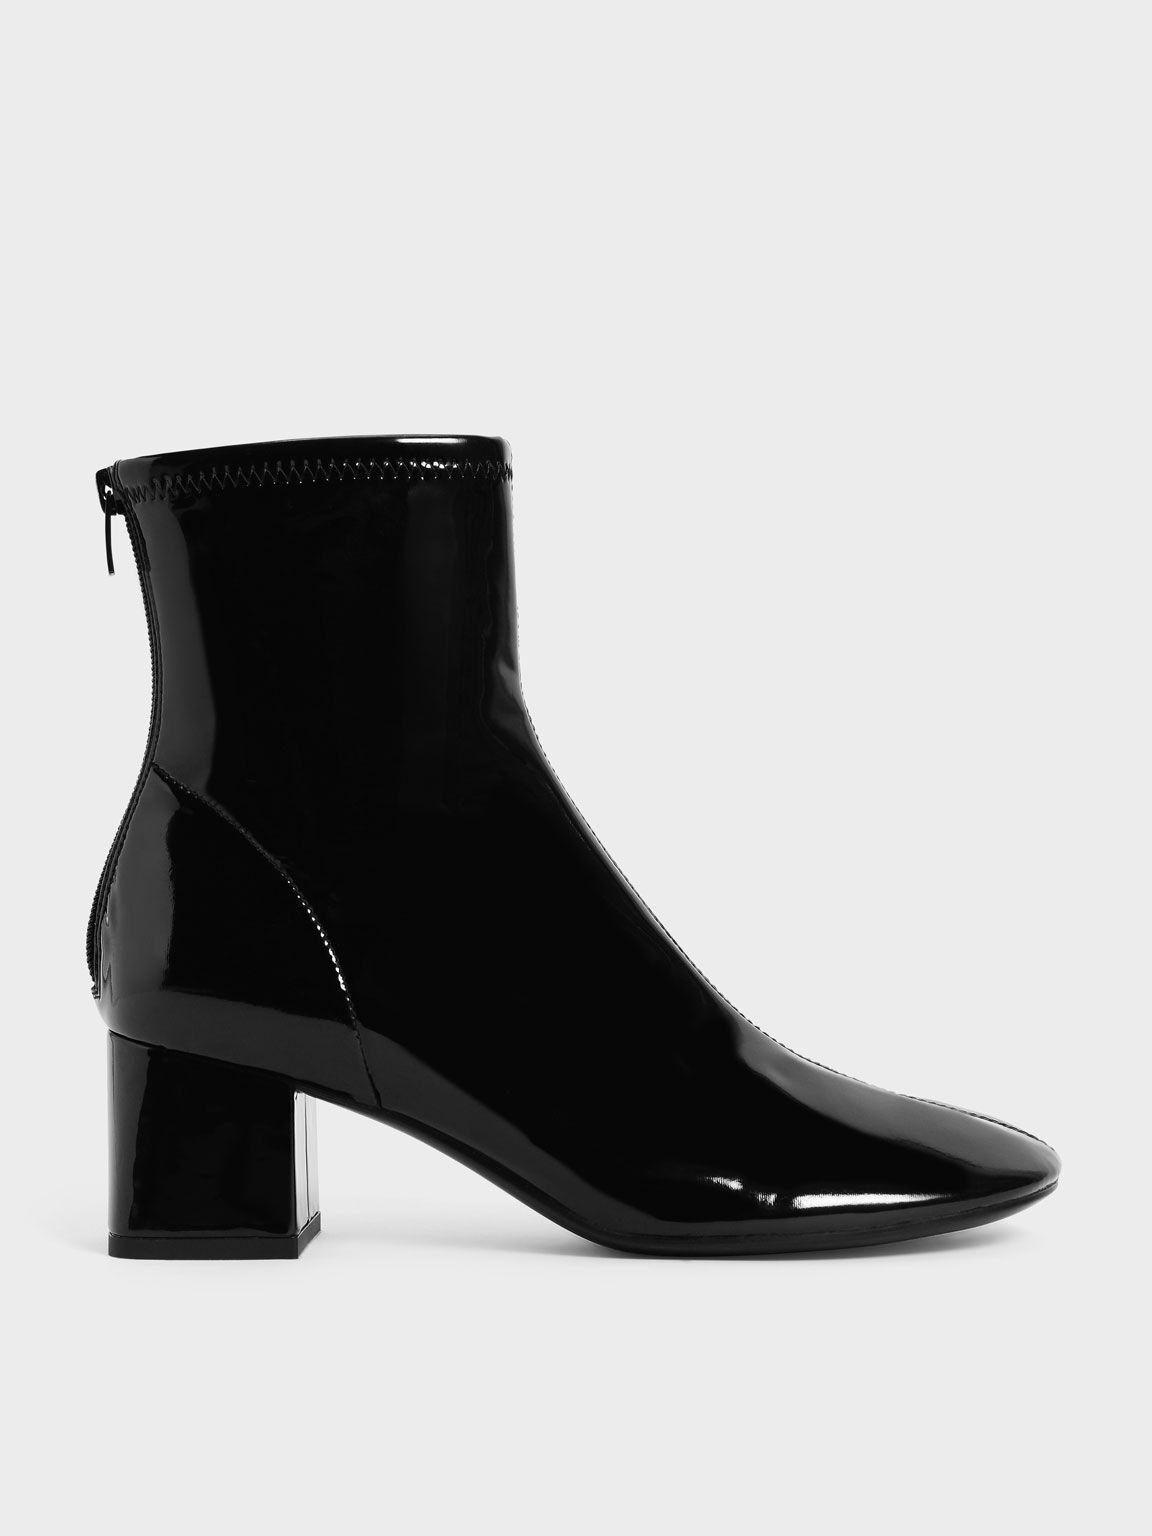 DALIT BLACK PATENT | Black ankle boots, Stiletto boots, Heels